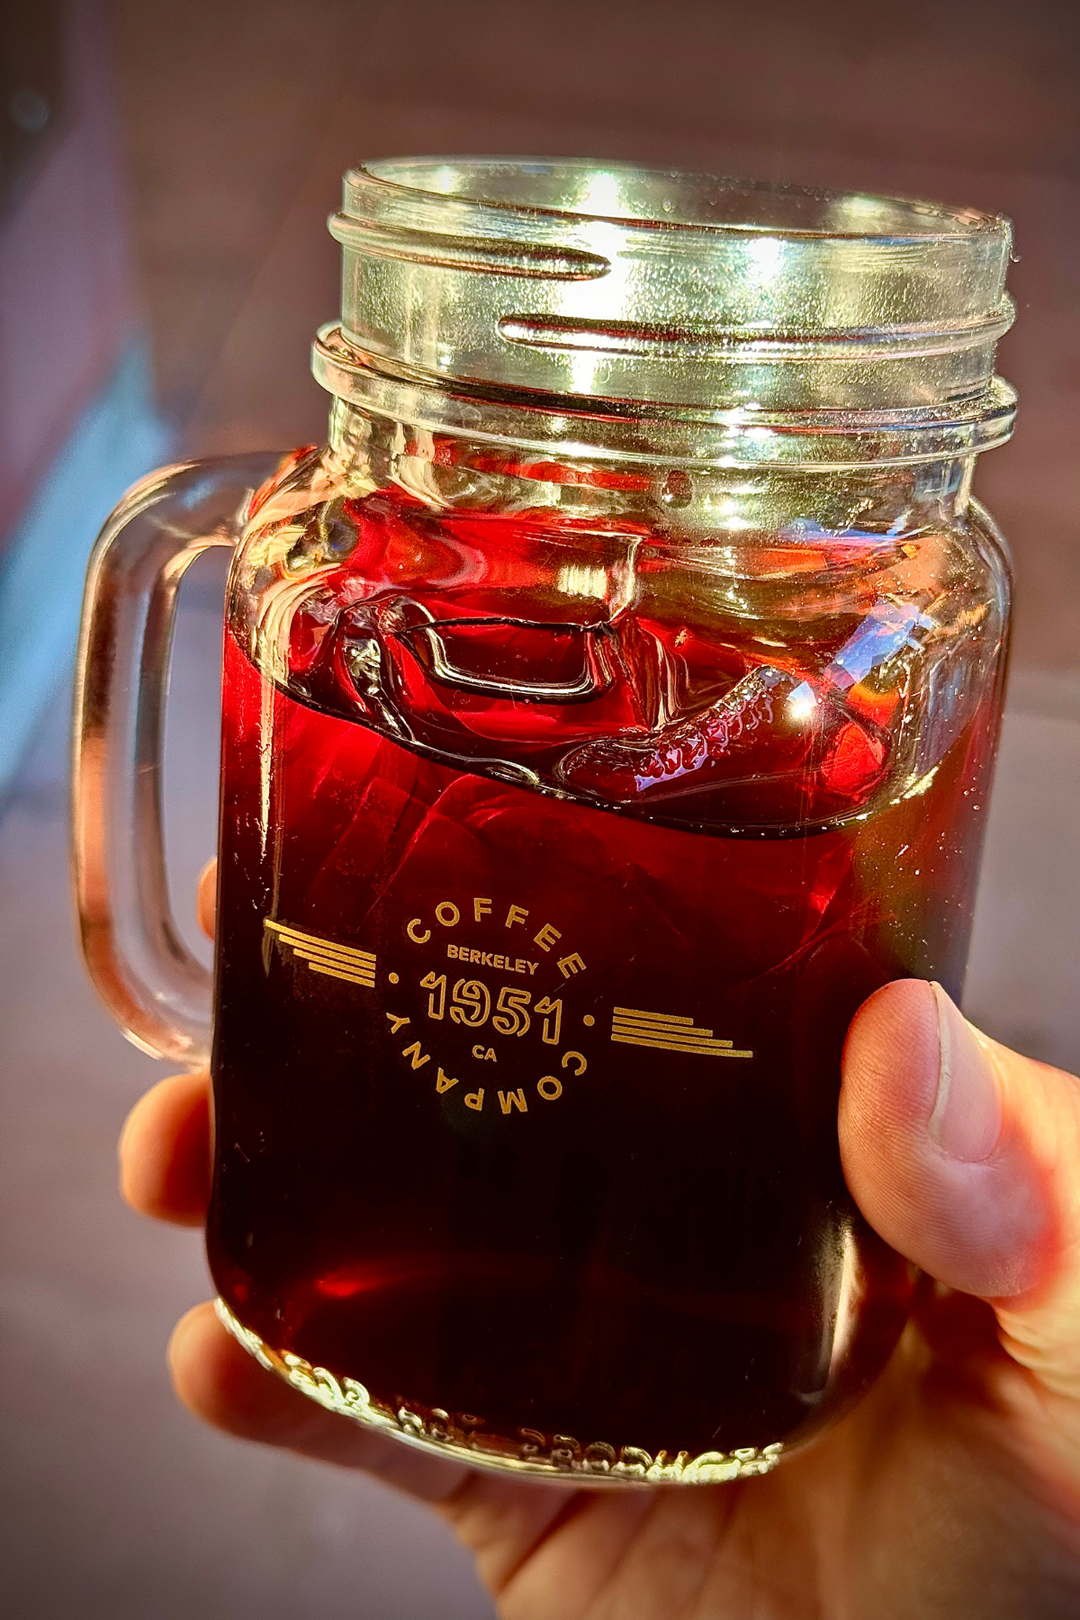 1951 Coffee Iced Glass Jar